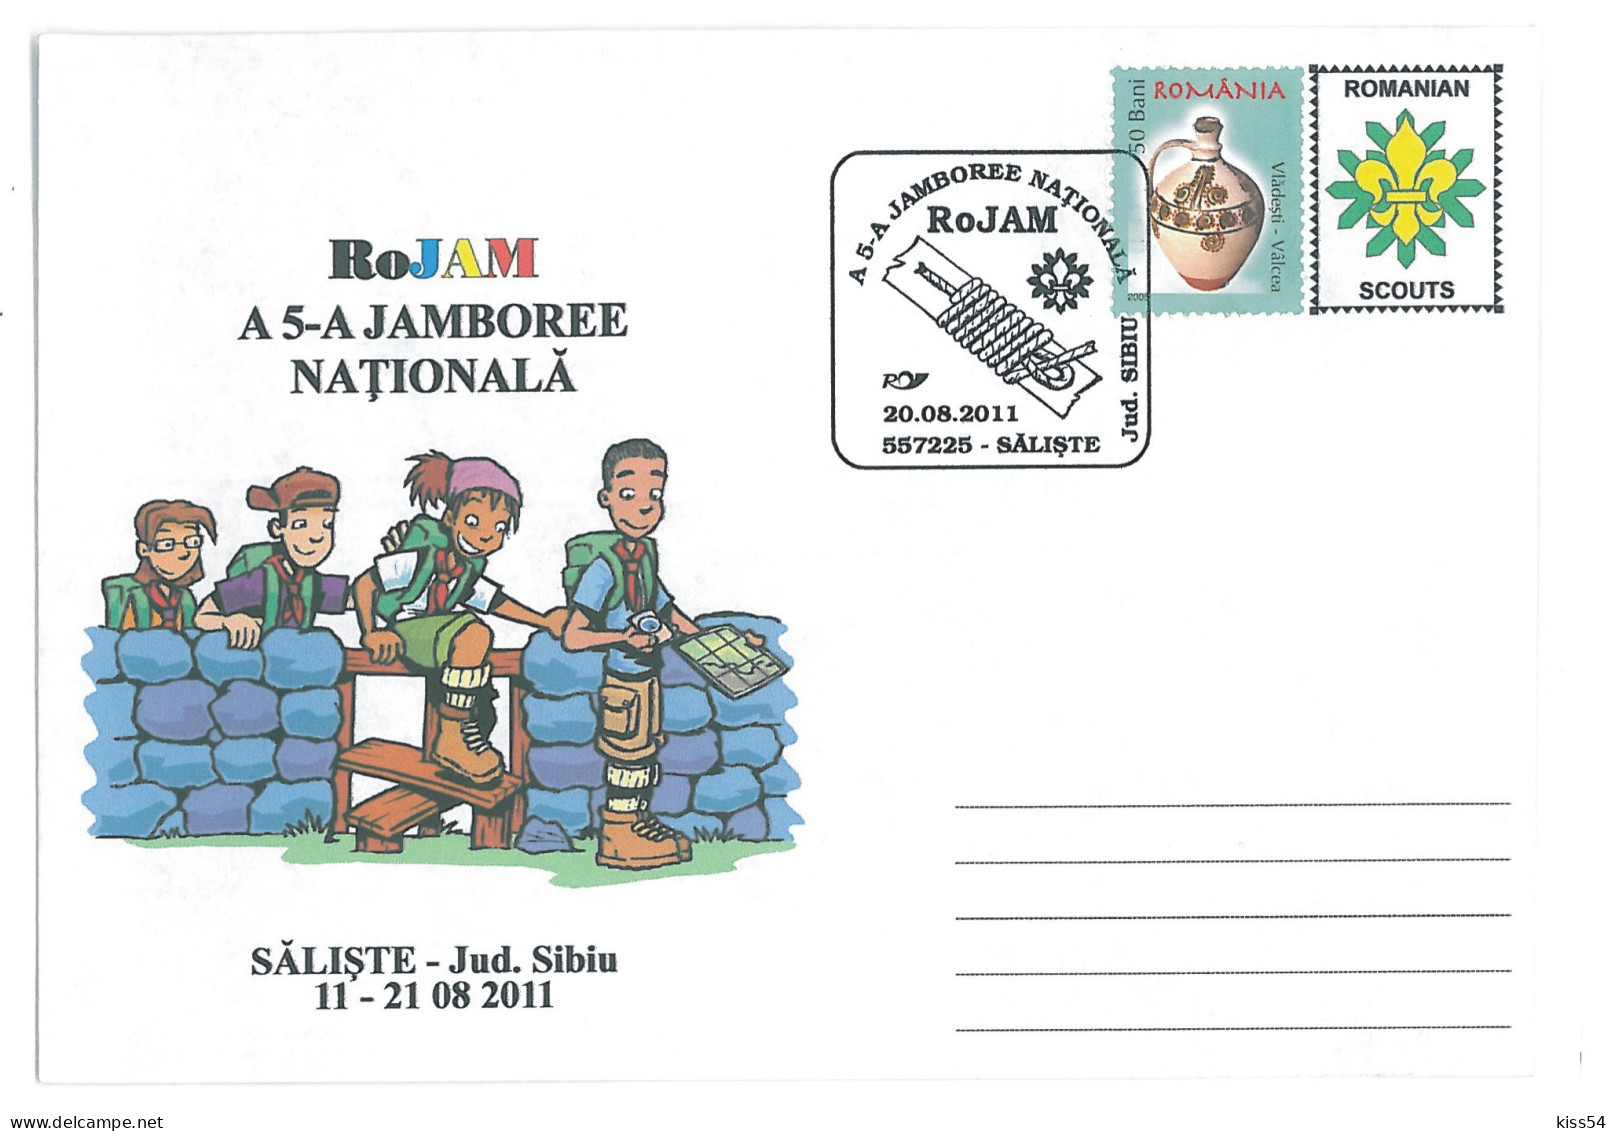 SC 61 - 1305 Scout ROMANIA, National JAMBOREE - Cover - Used - 2011 - Briefe U. Dokumente